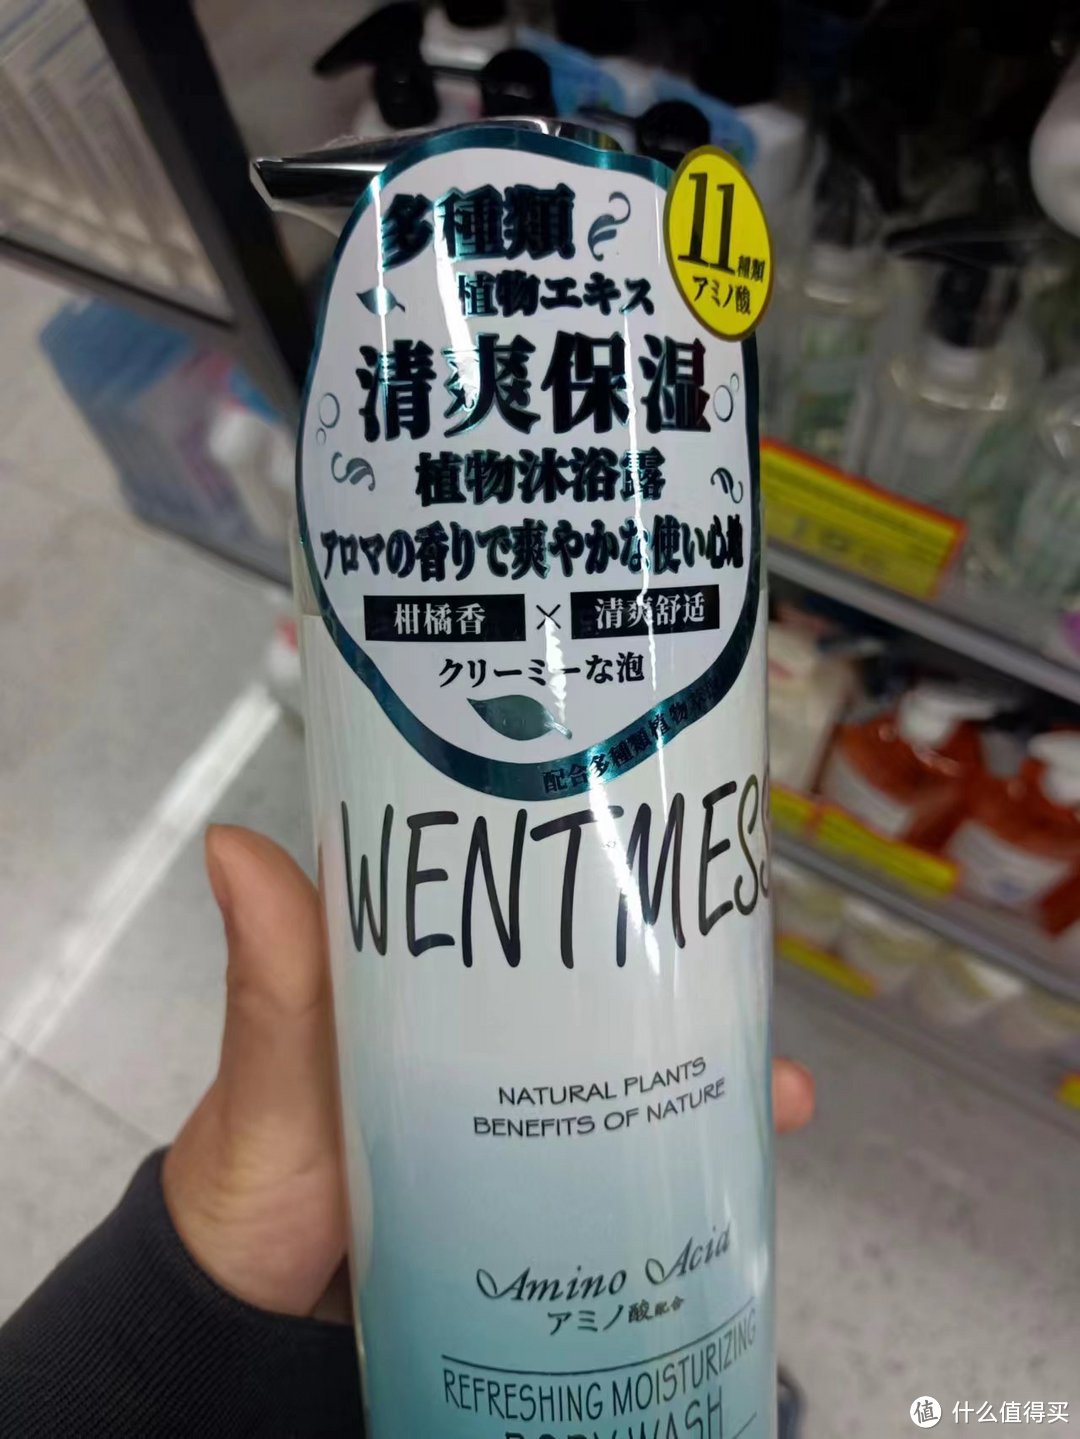 Wentmess唯伊丝控油洗发水：日本科技的新突破